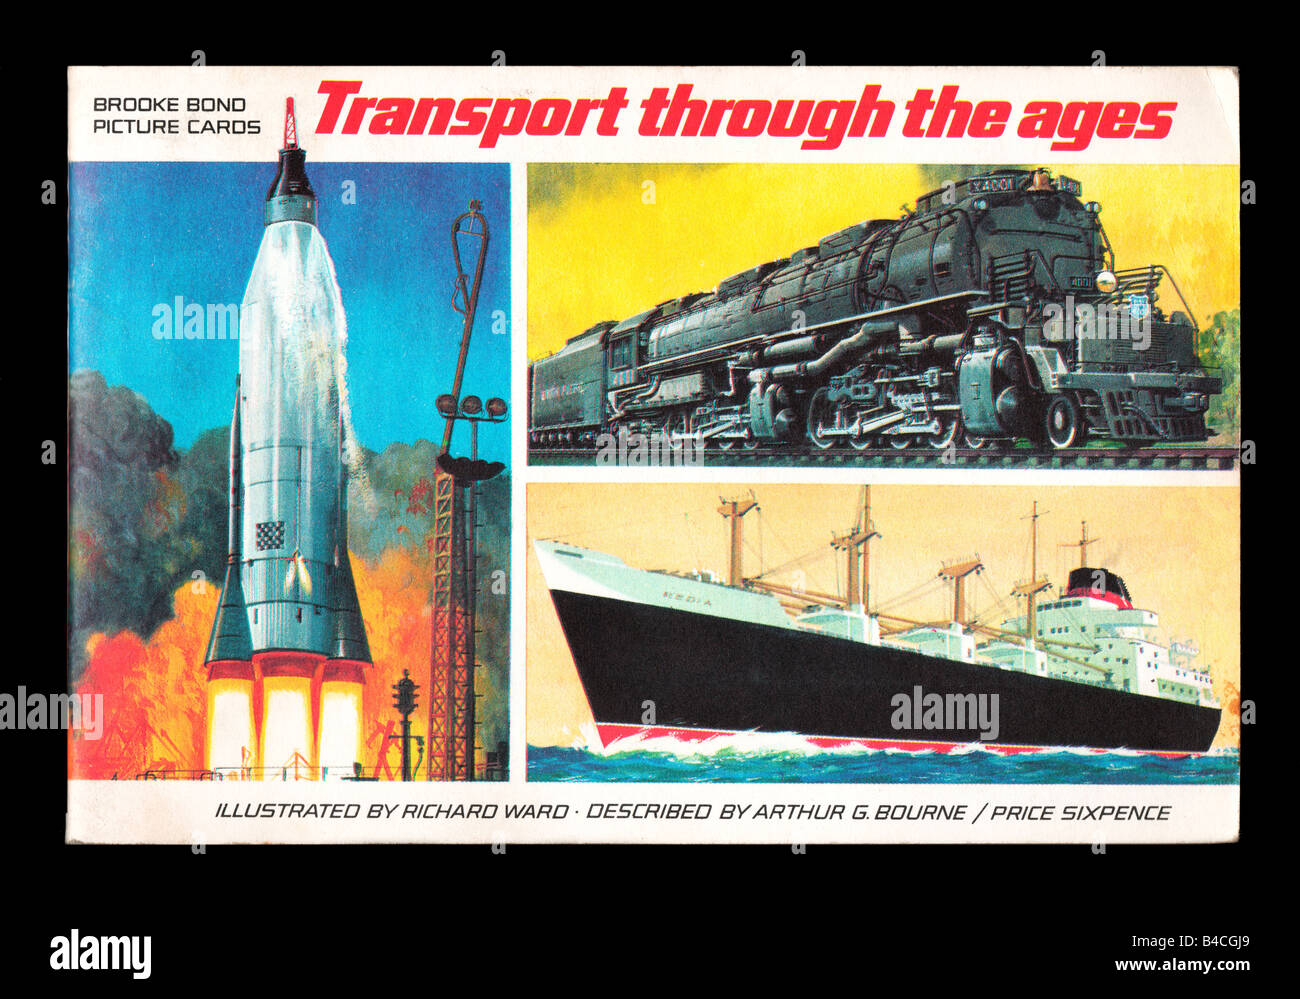 CHOOSE CARD BROOKE BOND OXO THE SAGA OF SHIPS 1970 